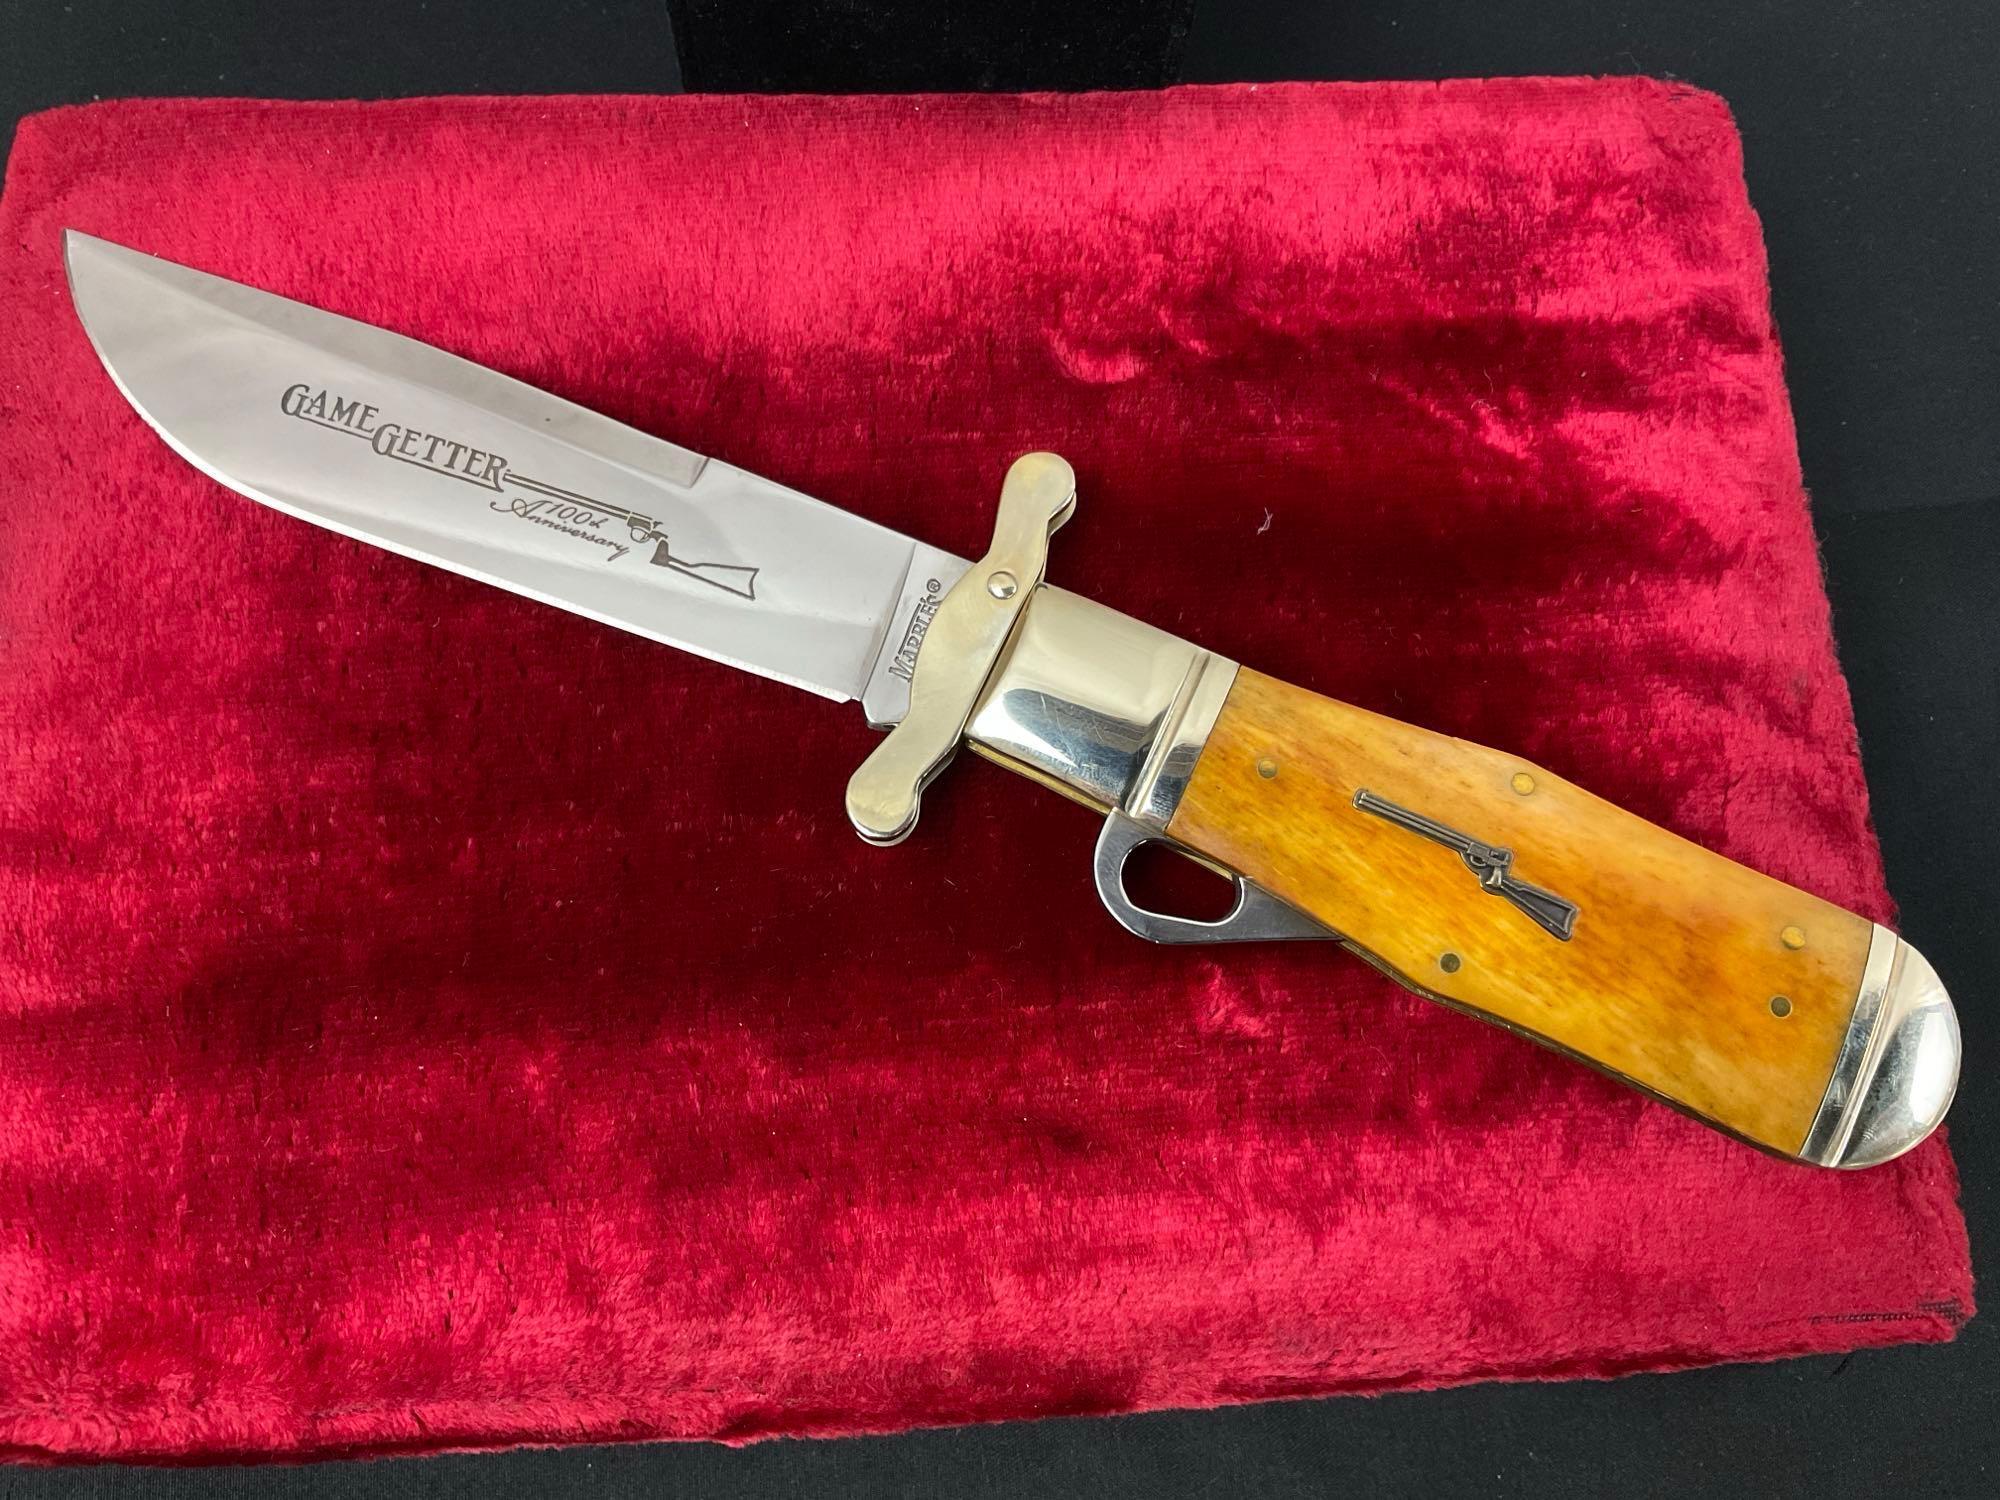 Marble MR217 Folding Knife 100th Anniversary Game Getter, NIB original case & box